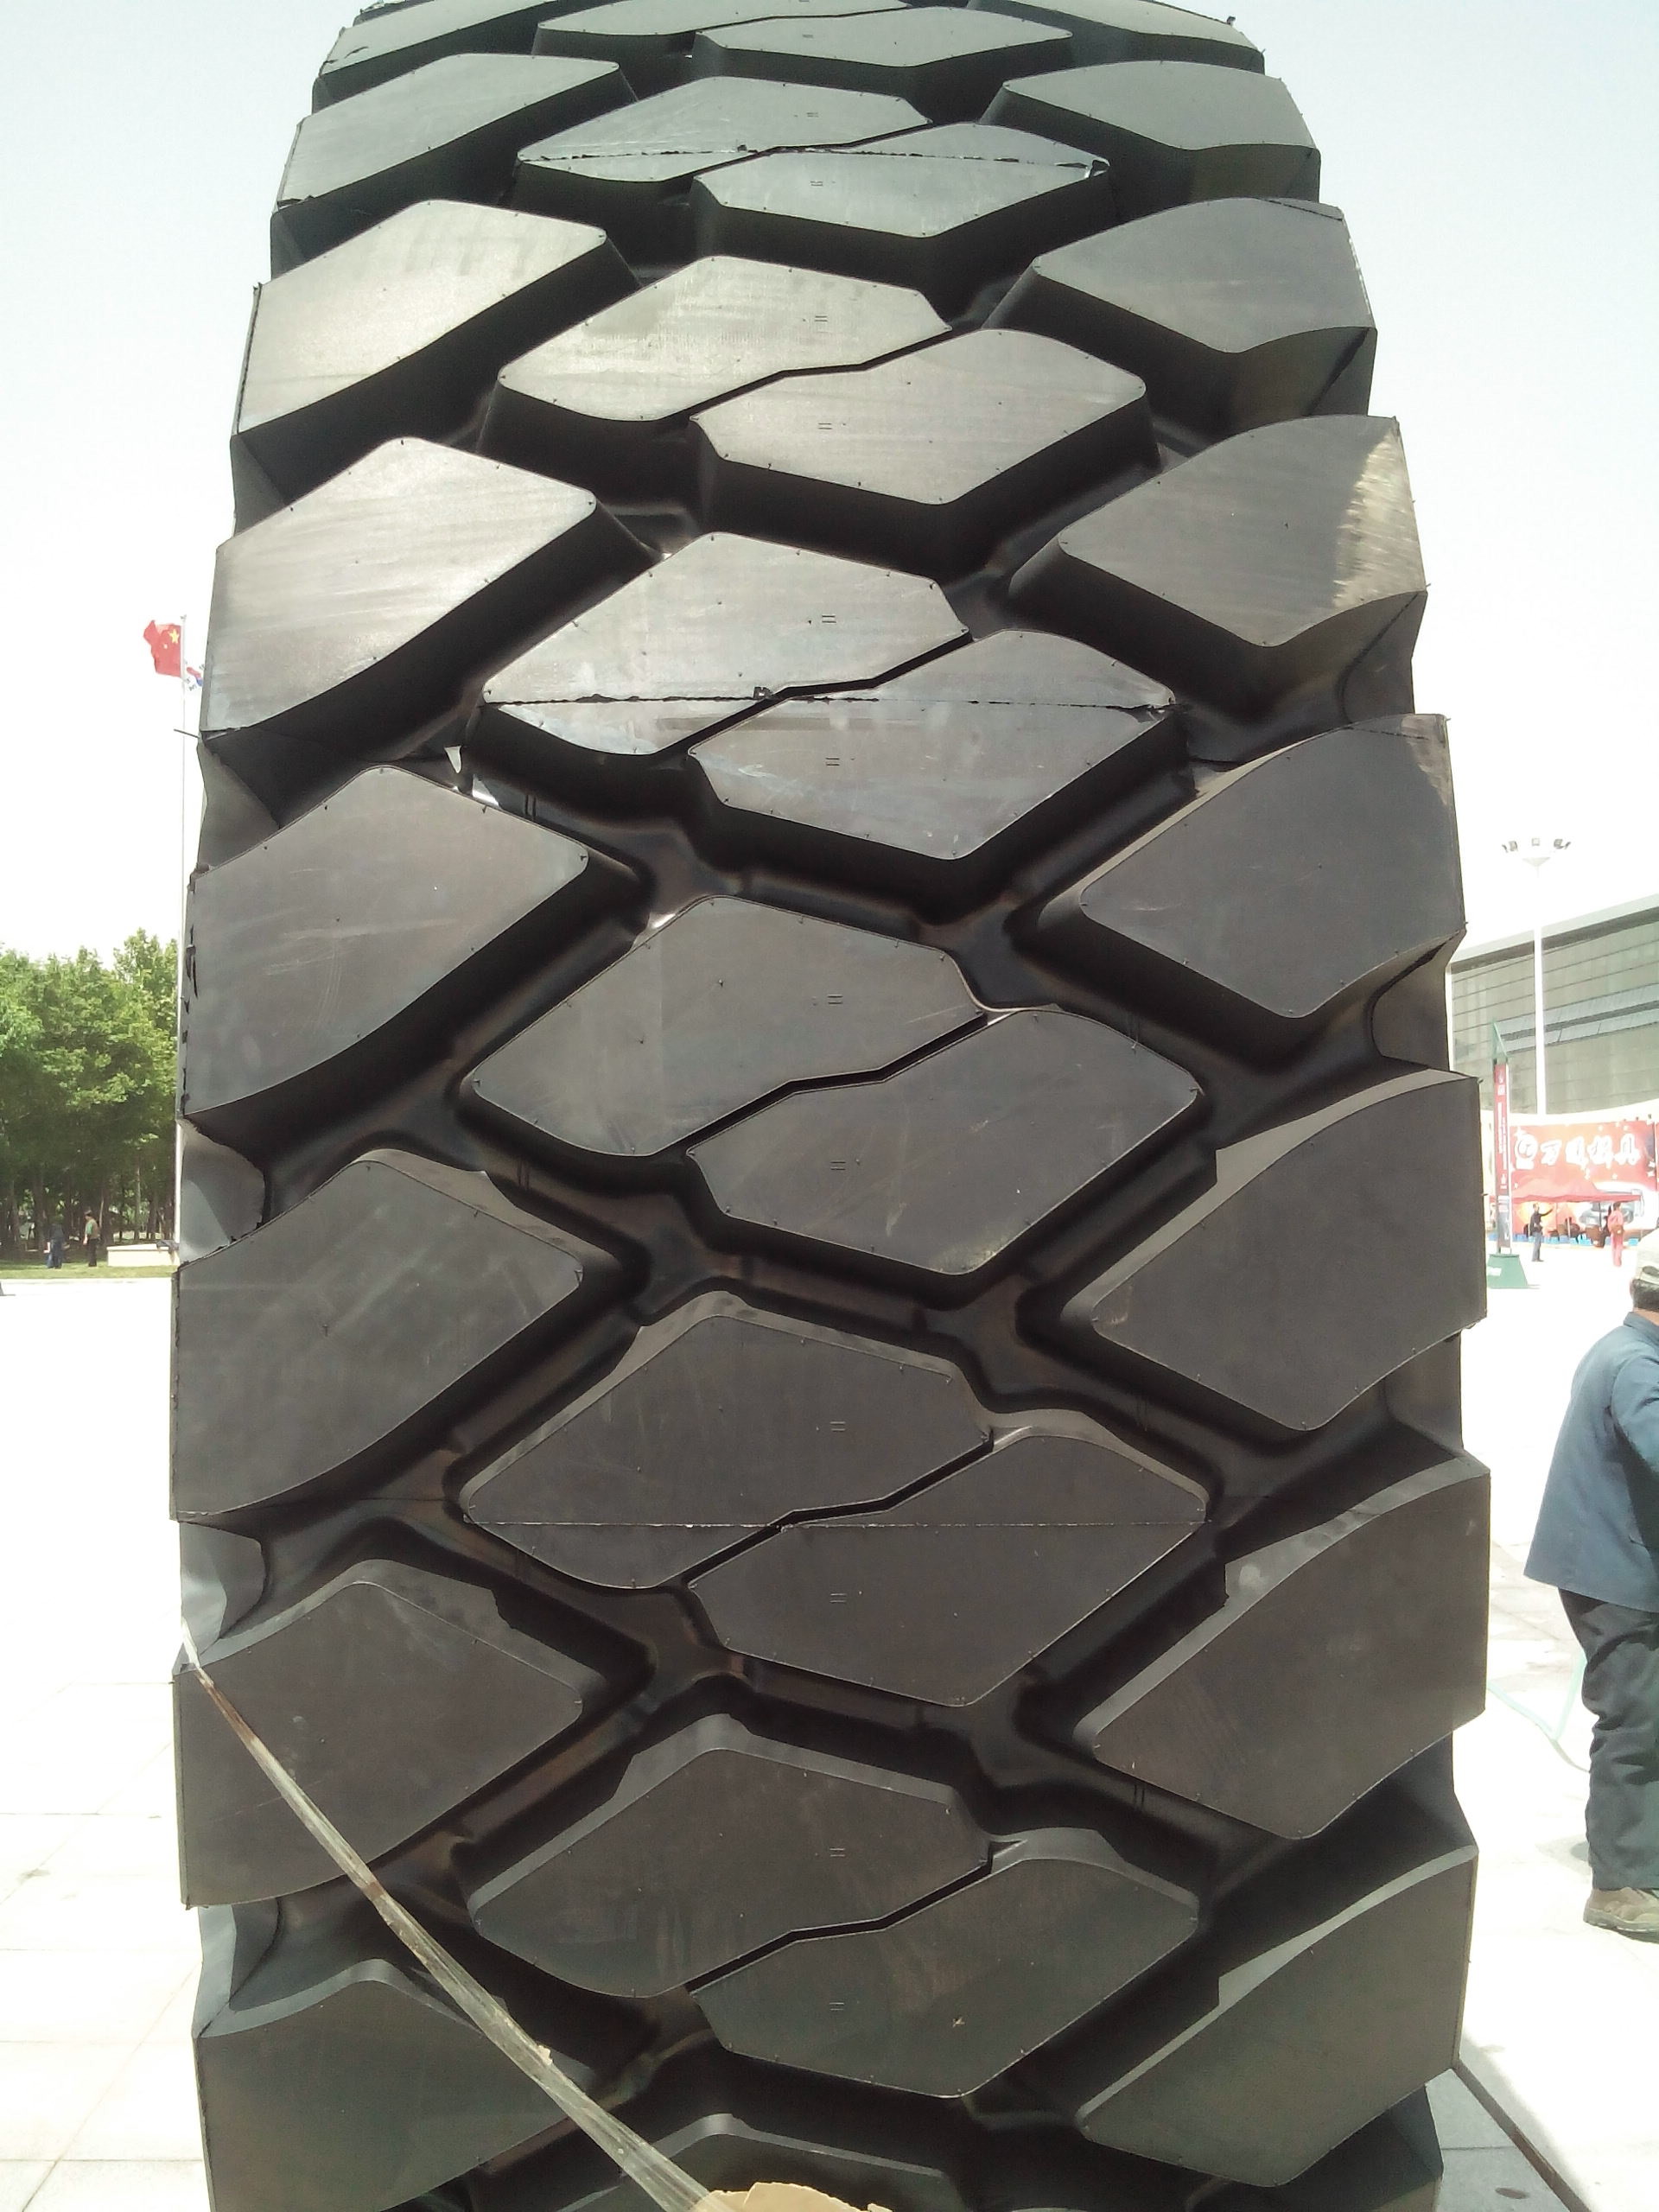 Radial OTR tire 40.00R57,4000R57,37.00R57,36.00R51,33.00R51,27.00R49,24.00R49